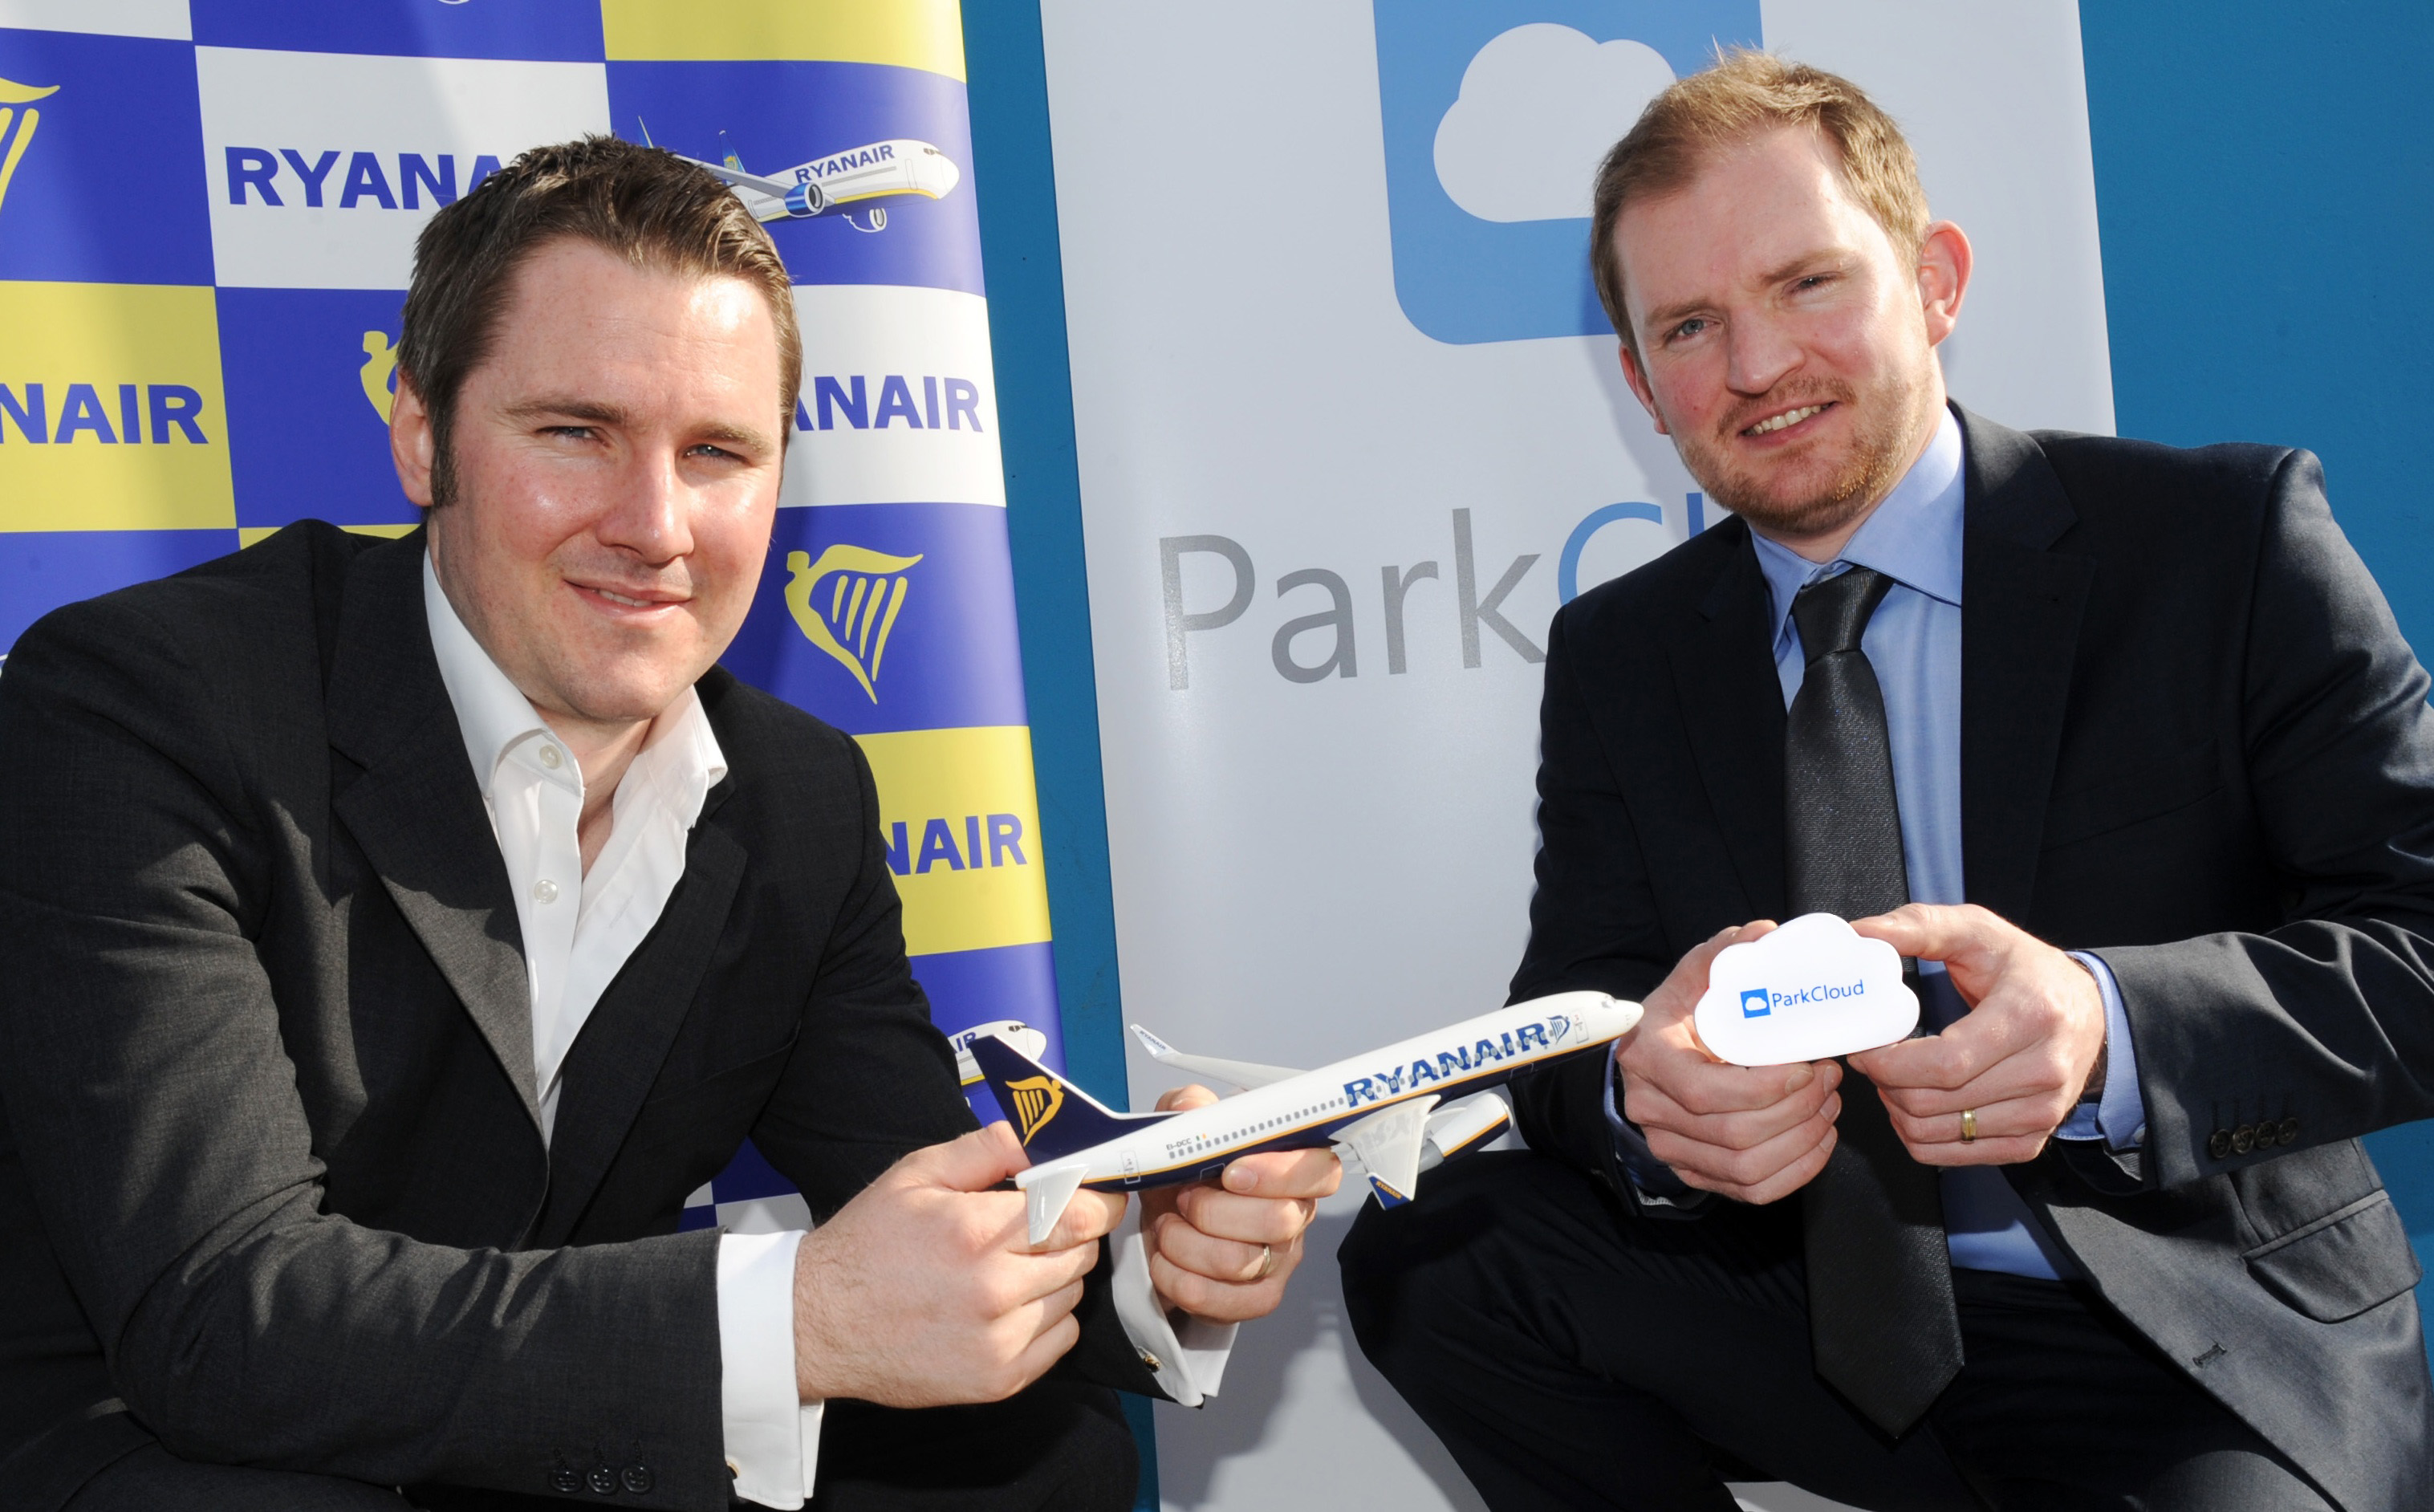 Ryanair and ParkCloud in partnership